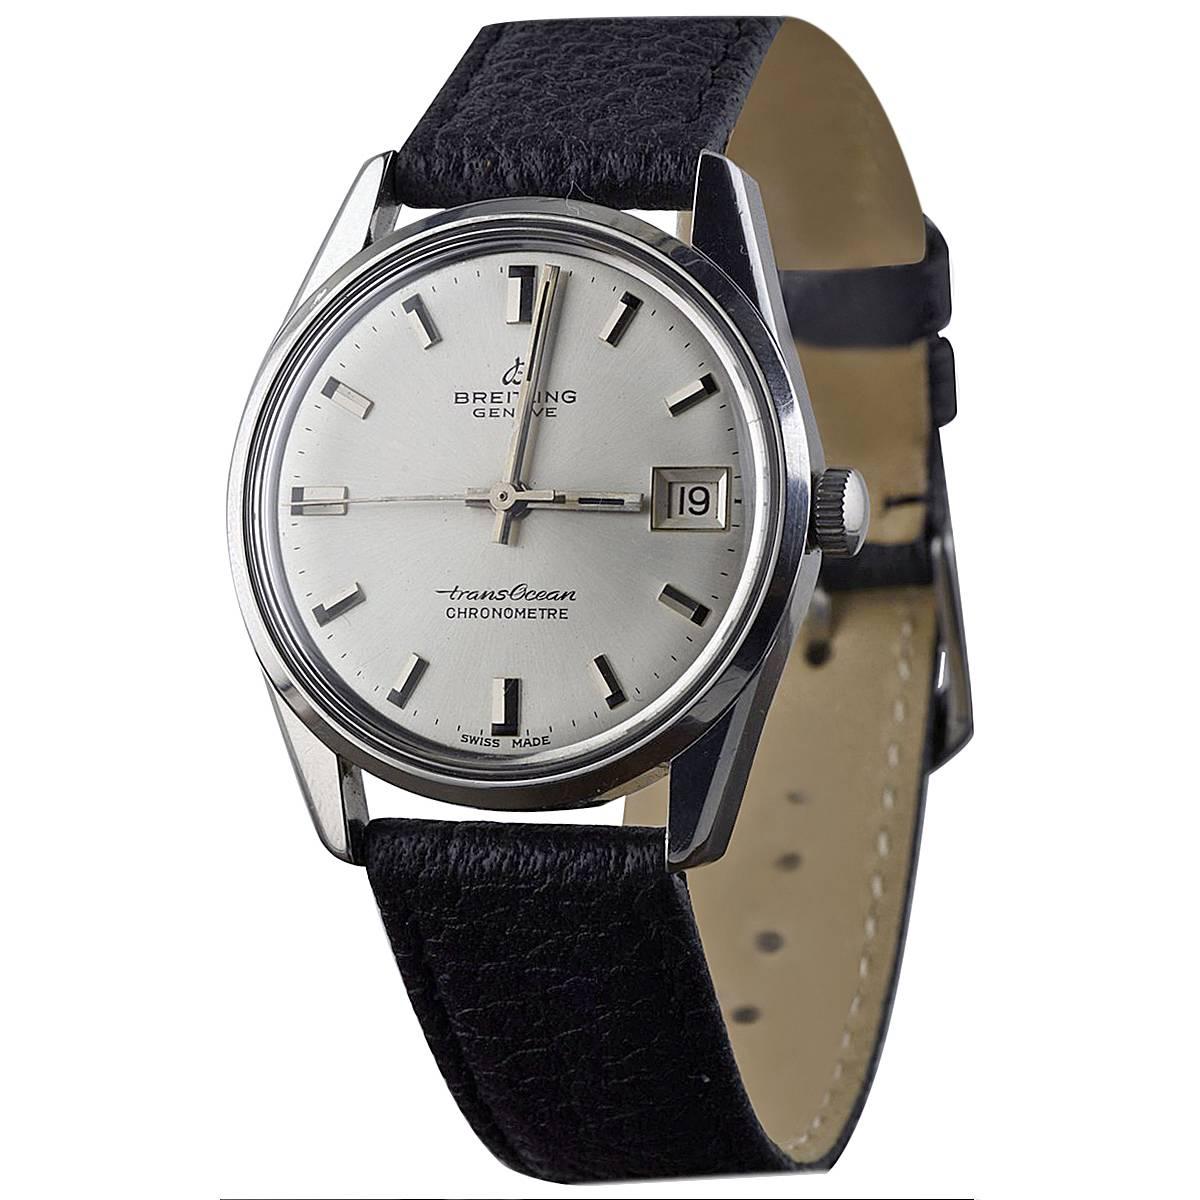 Vintage Chronometer Breitling Trans Ocean Automatic, Date 1969 For Sale